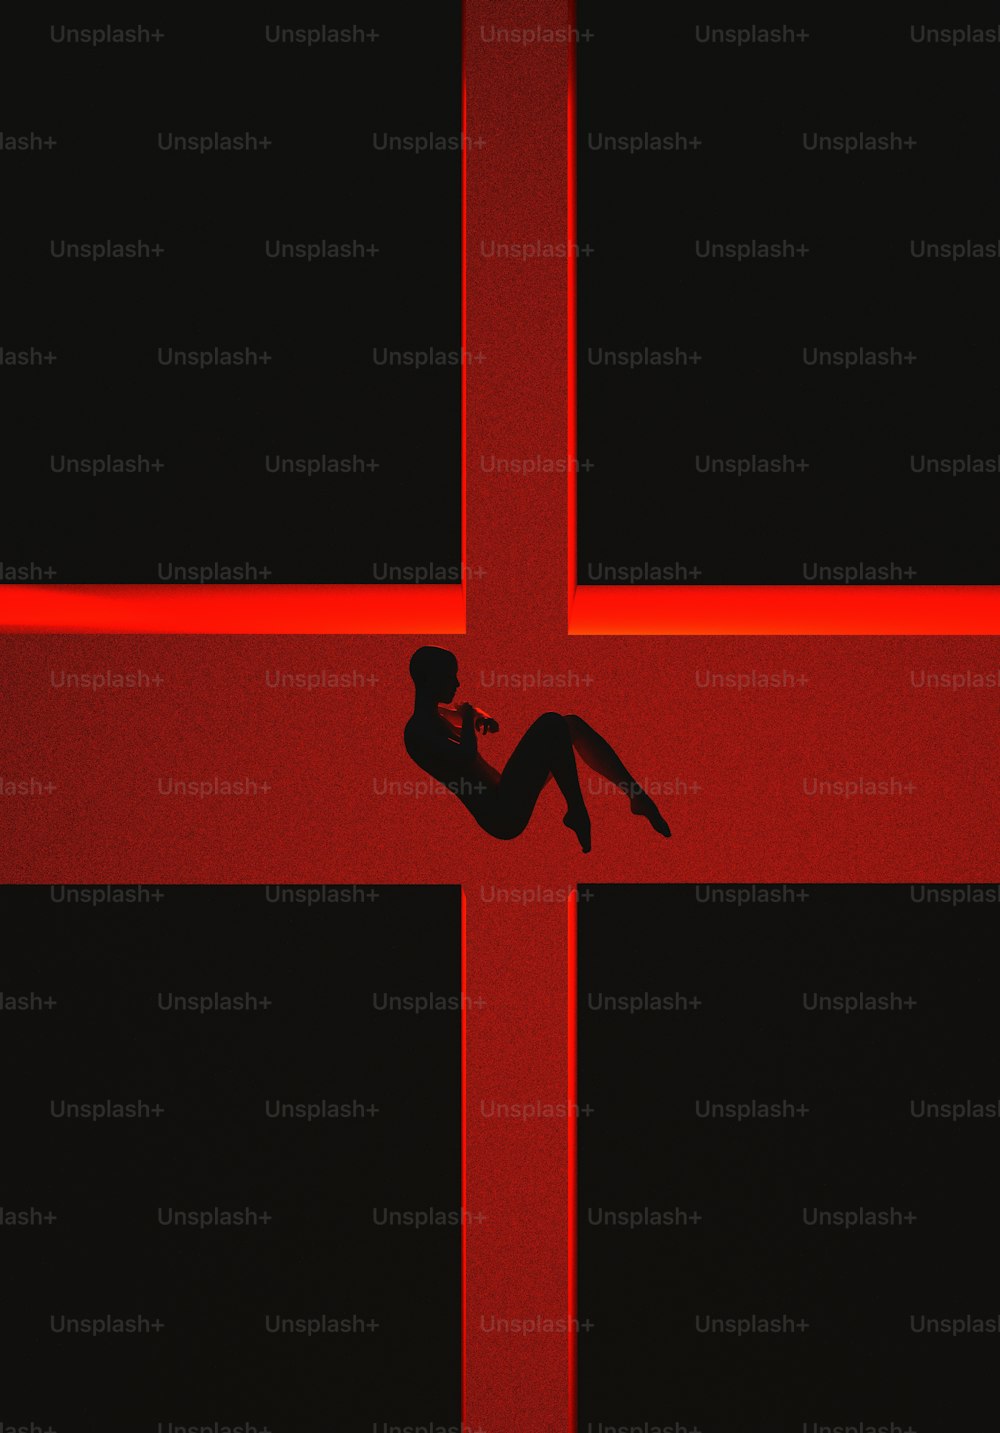 una silueta de una persona acostada en una cruz